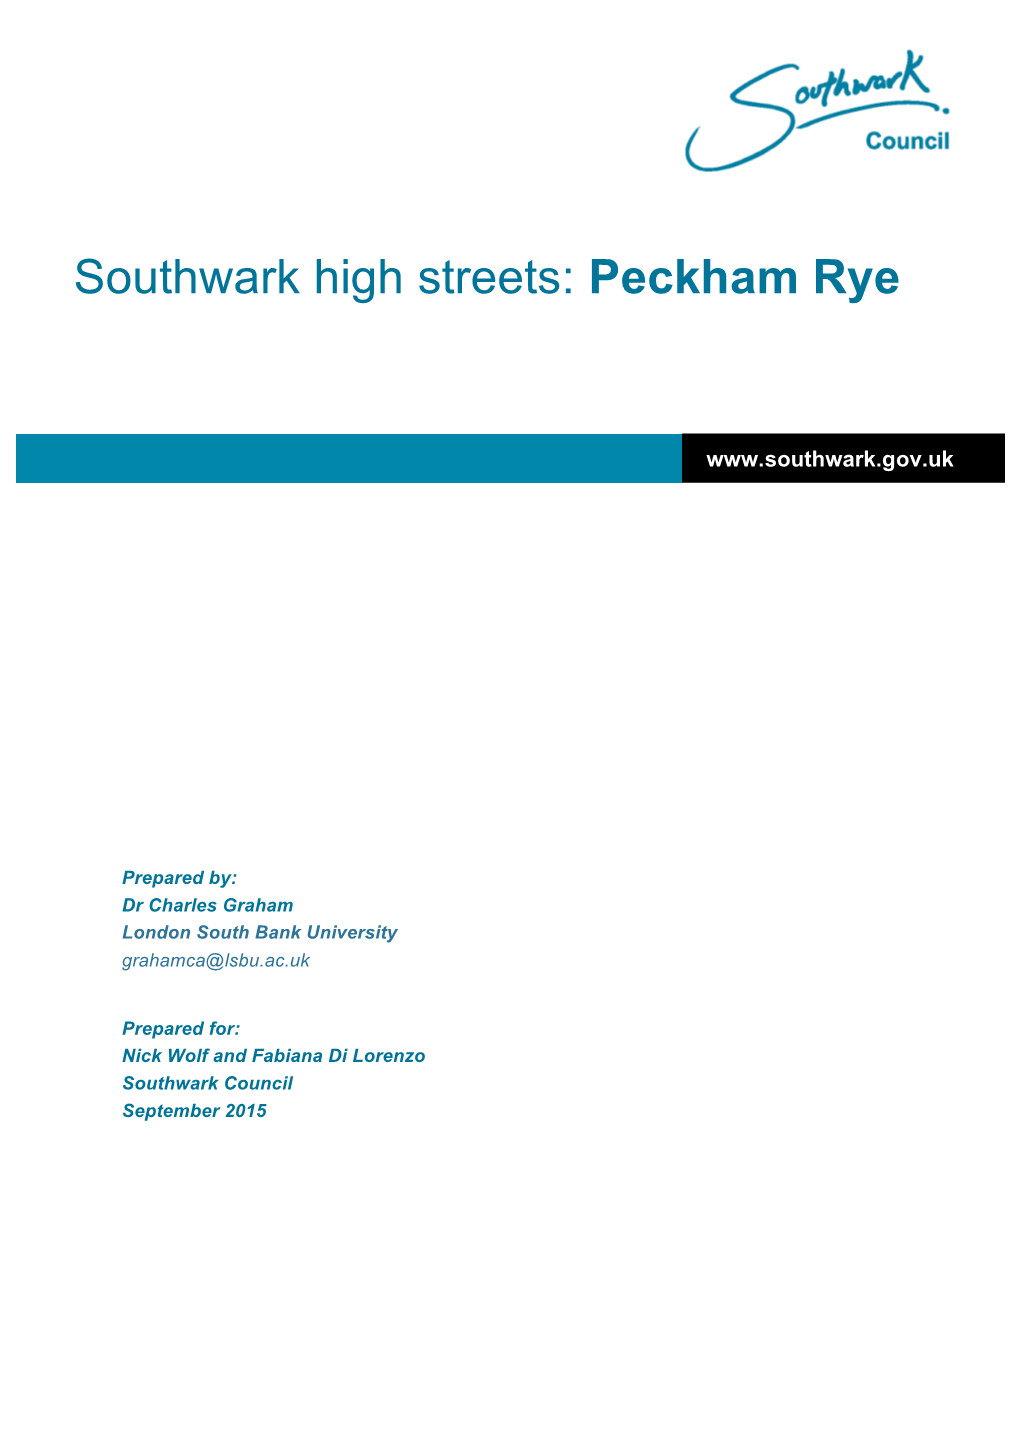 Southwark High Streets: Peckham Rye